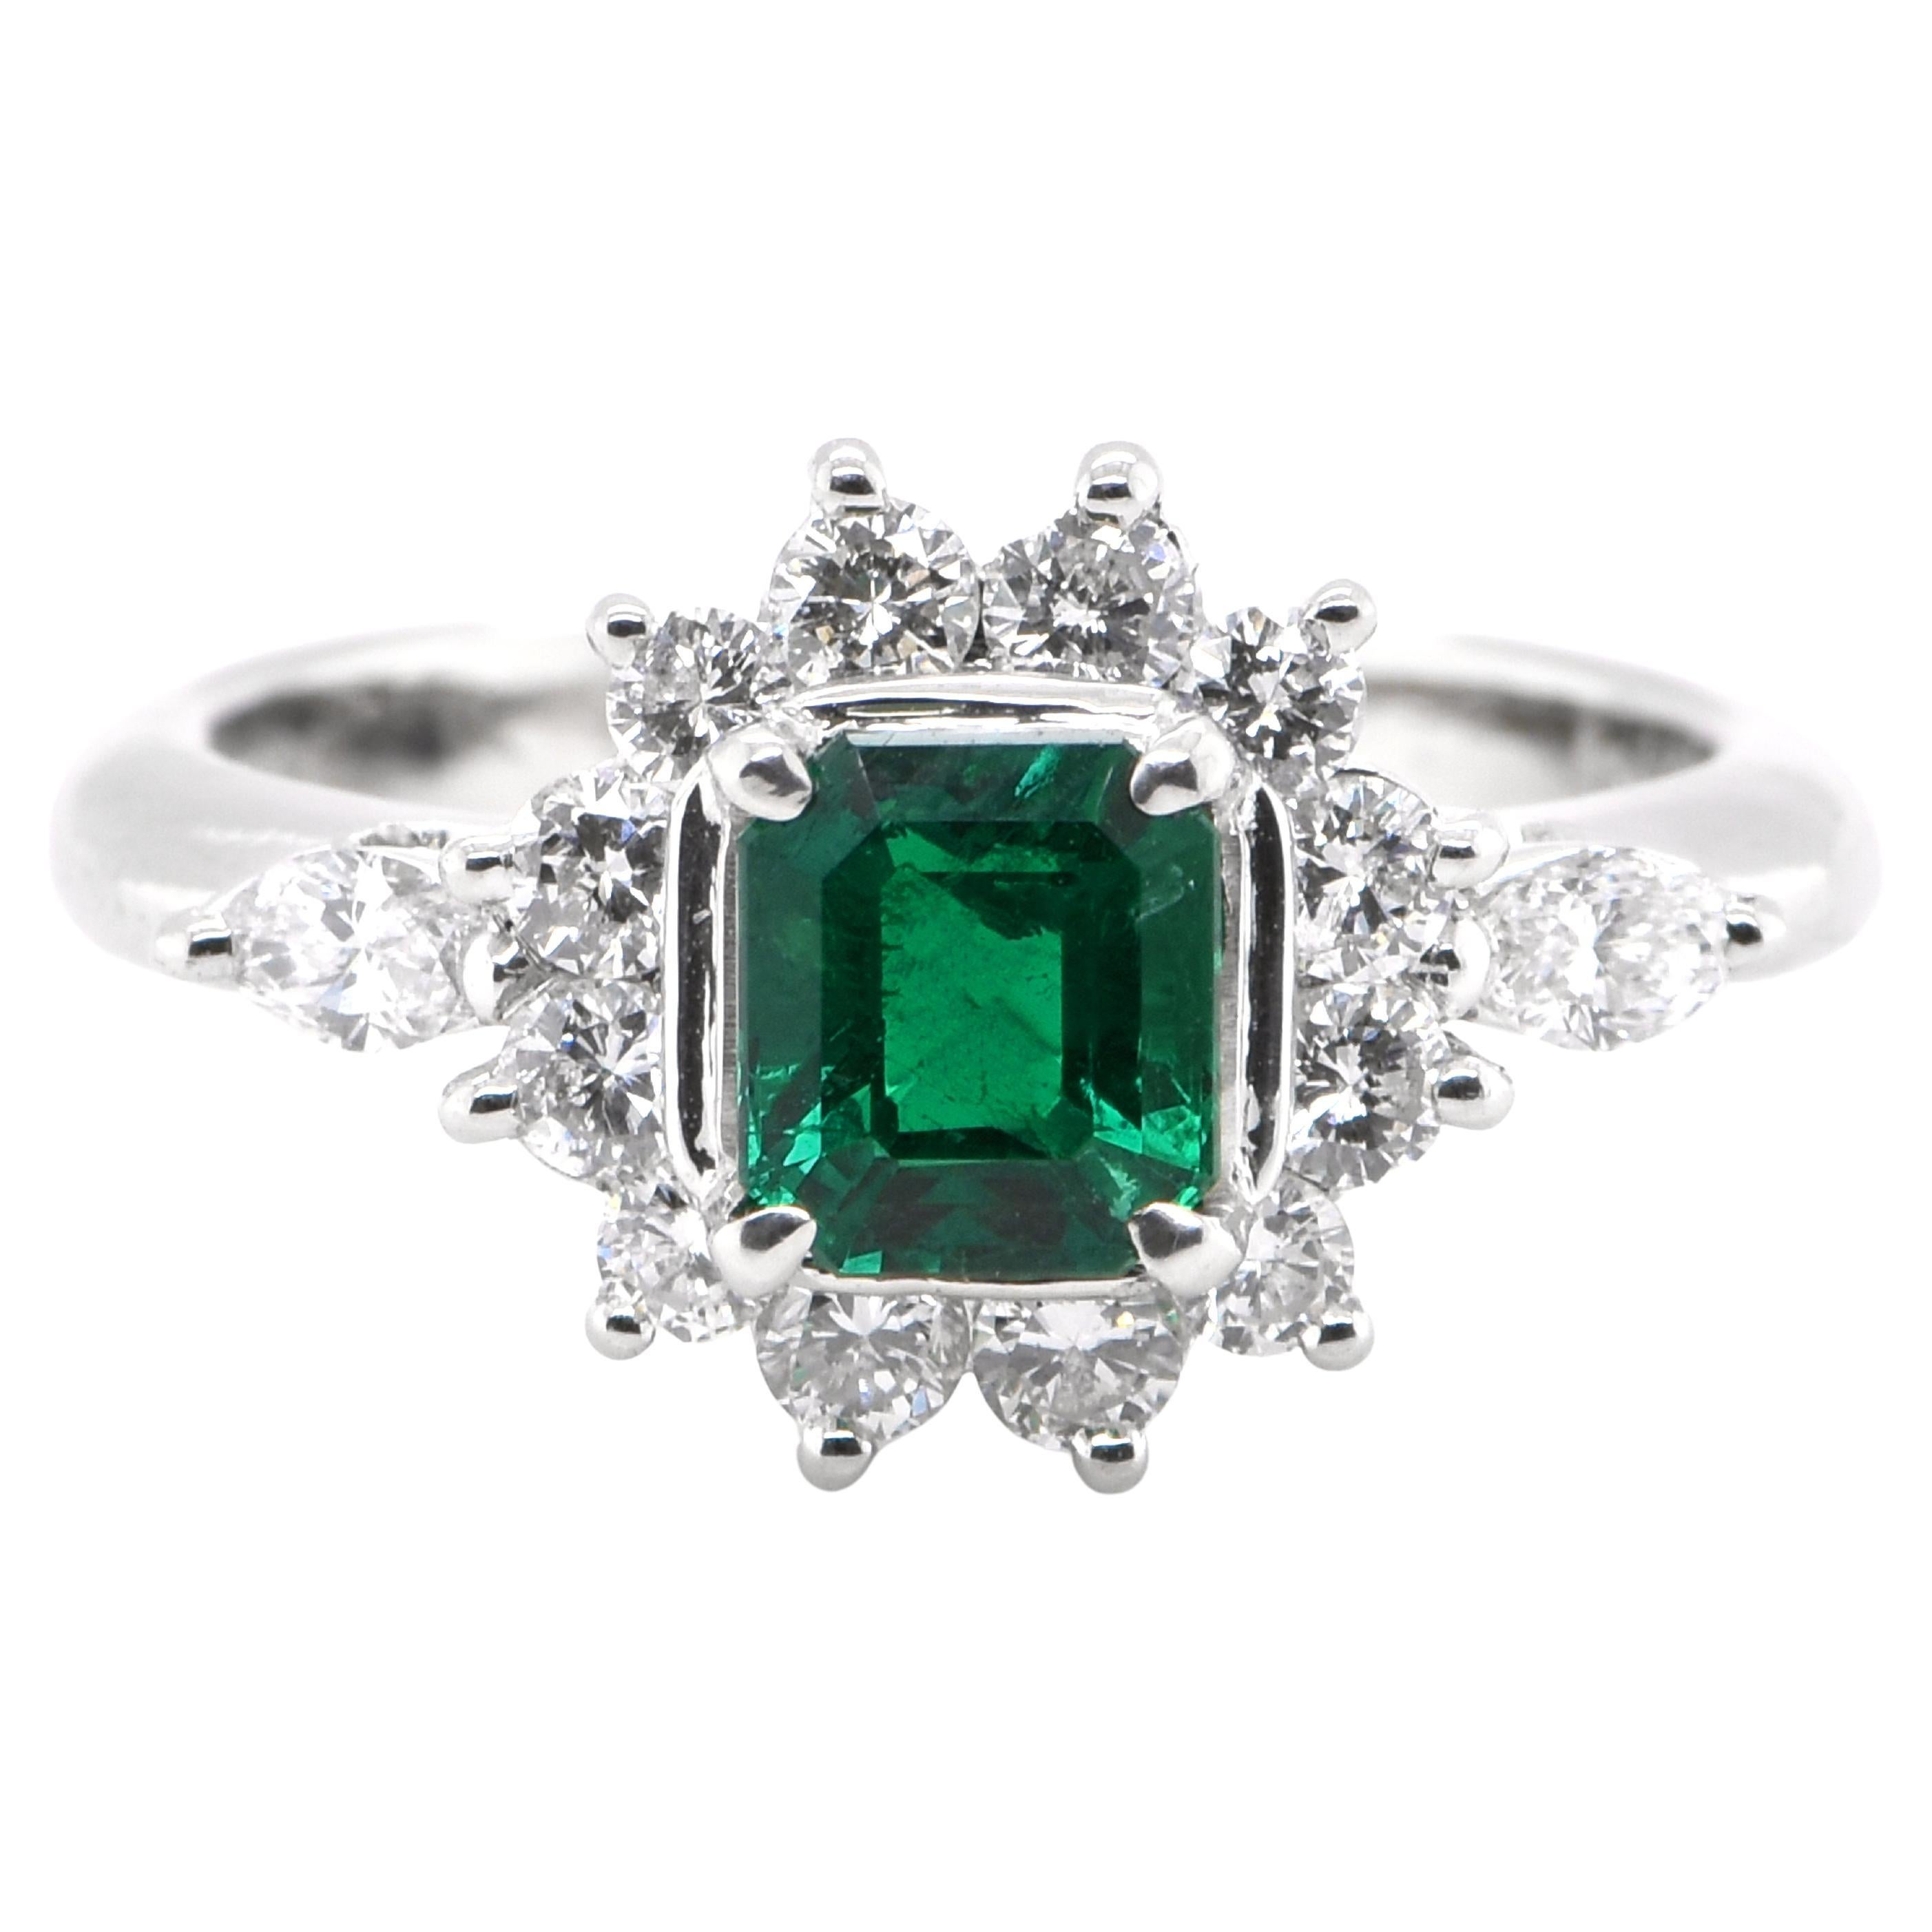 0.67 Carat Natural Emerald and Diamond Ring Set in Platinum